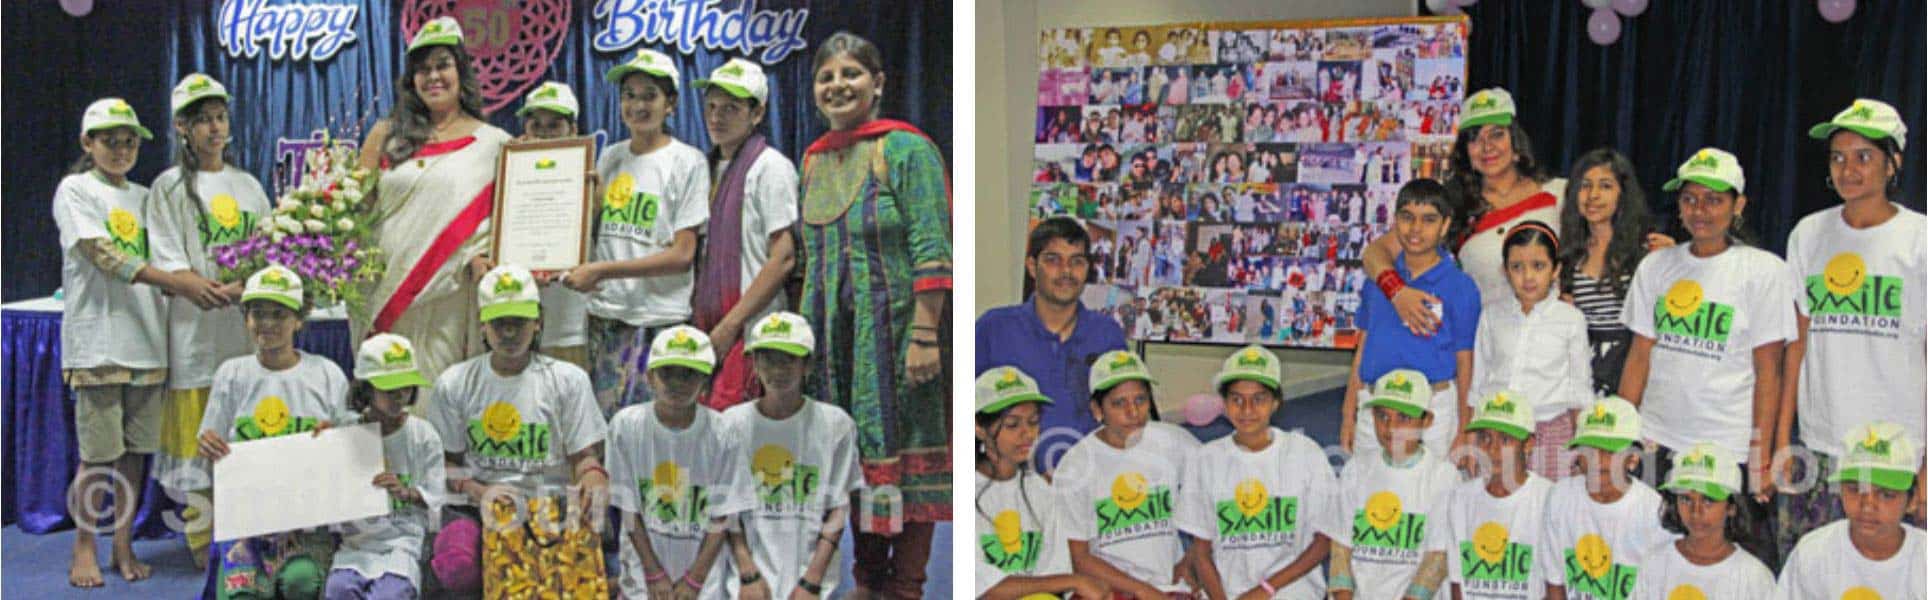 Dr. Tarita Shankar becomes Goodwill Ambassador for Smile Foundation in Pune